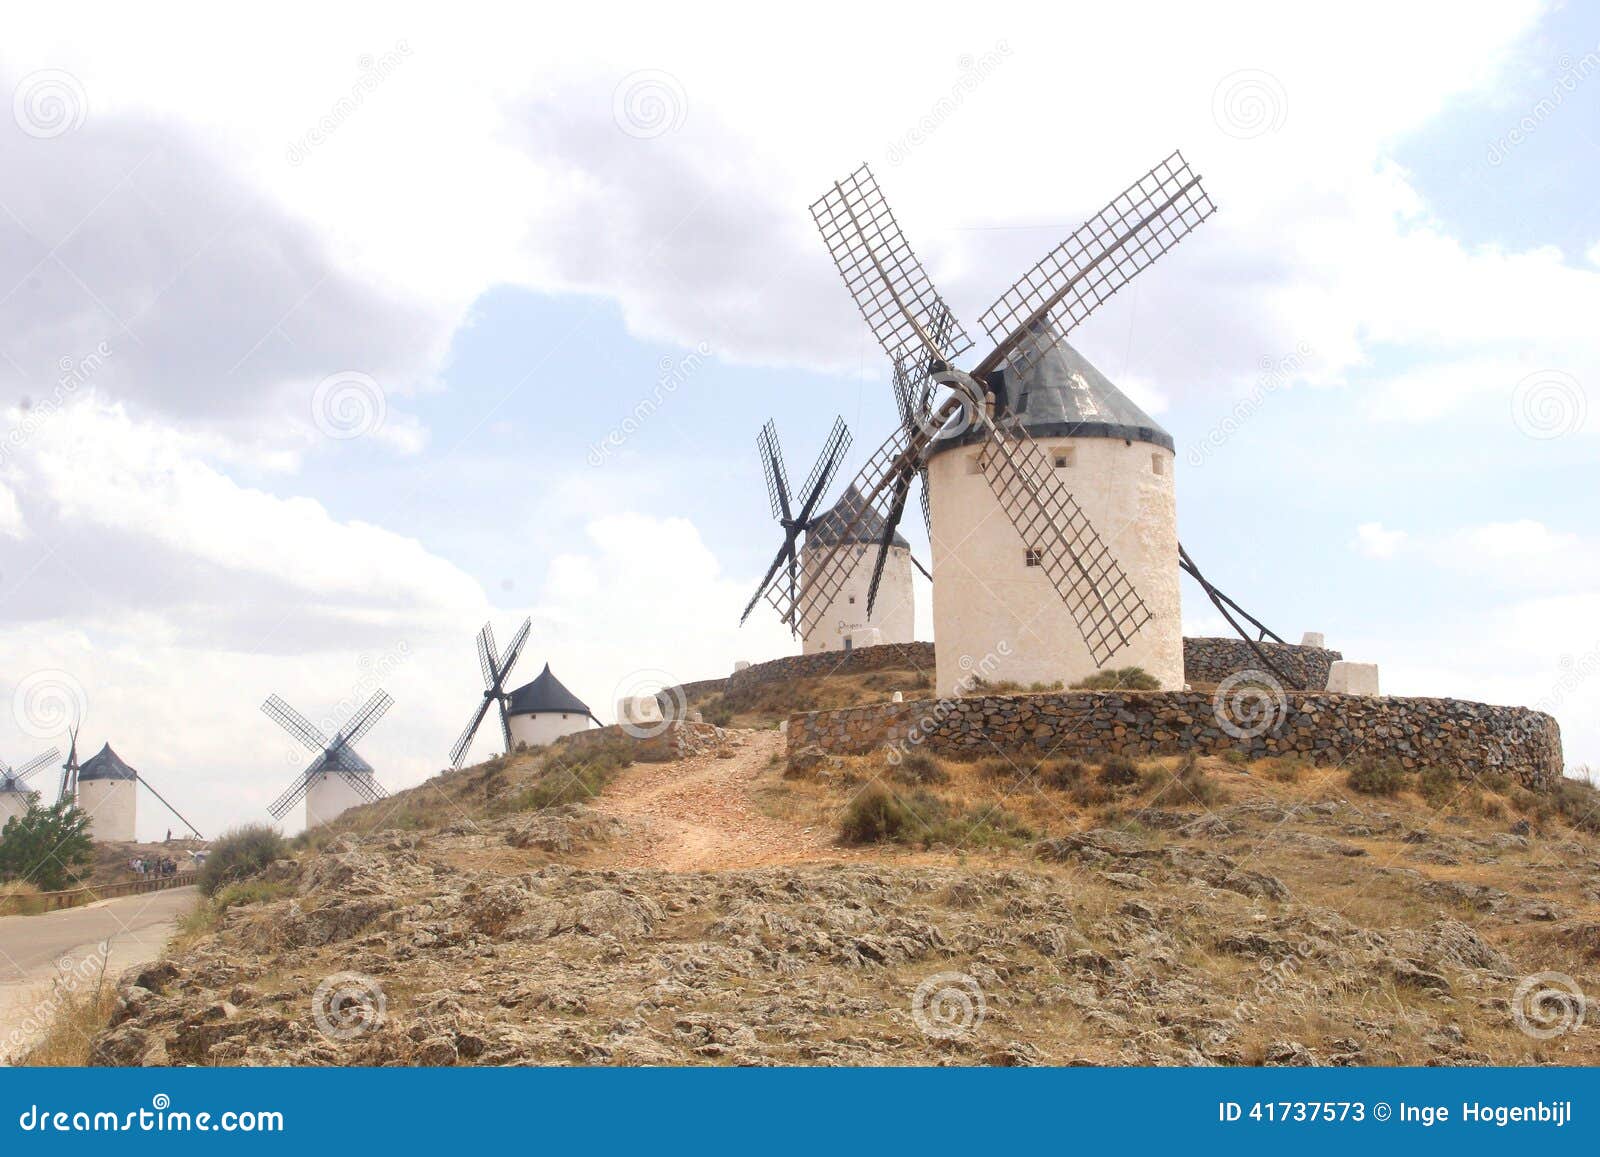 picturesque windmills of don quichot in consuegra, spain